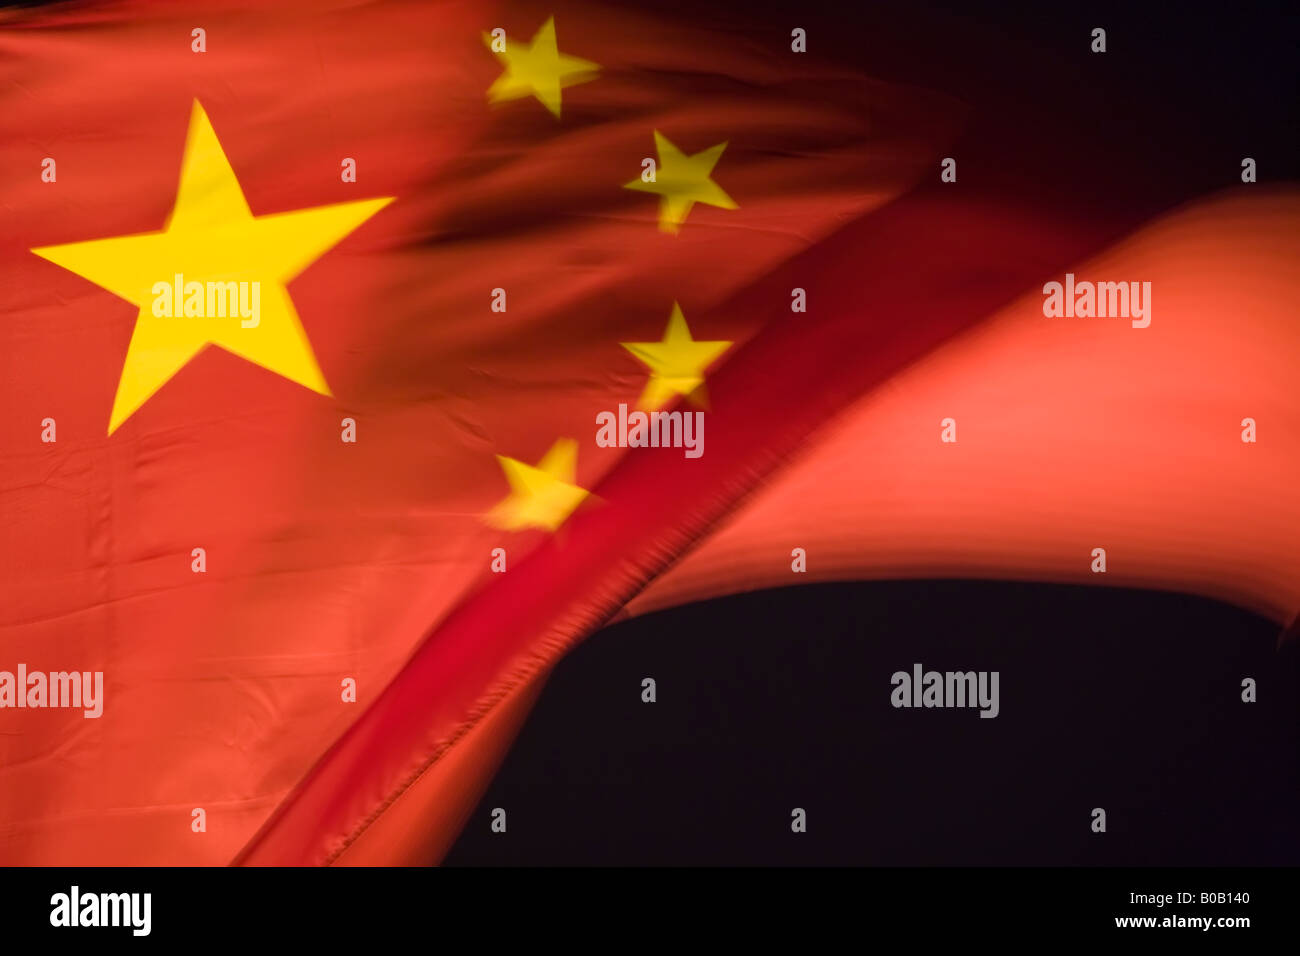 China Shanghai Chinese flag illuminated at night blurred motion Stock Photo